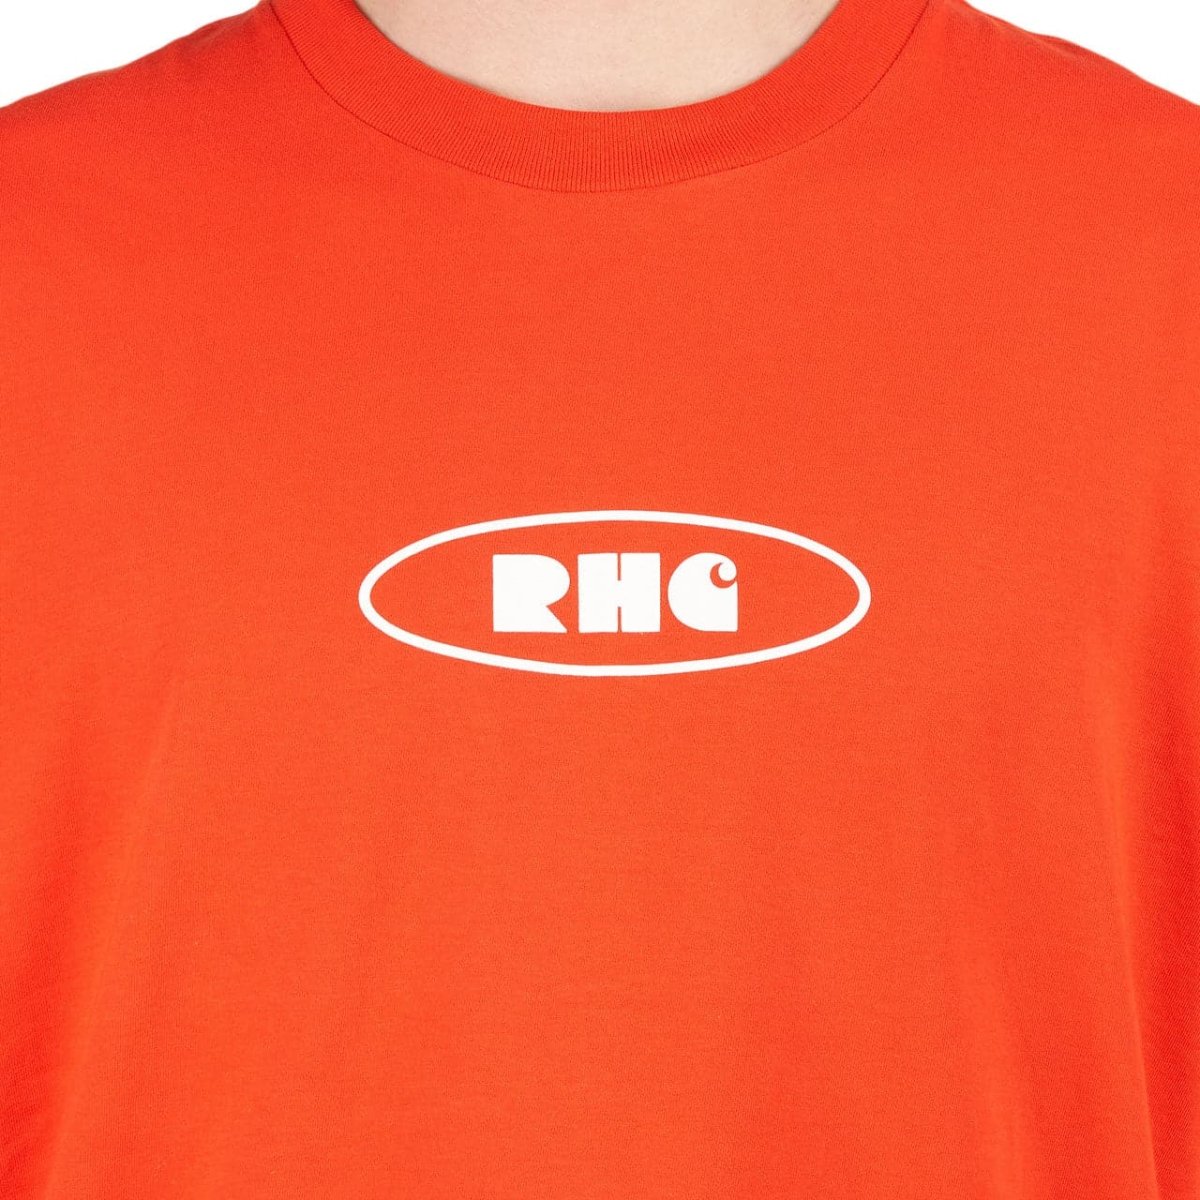 Carhartt WIP x Relevant Parties S/S Rush Hour T-Shirt (Rot / Weiß)  - Allike Store